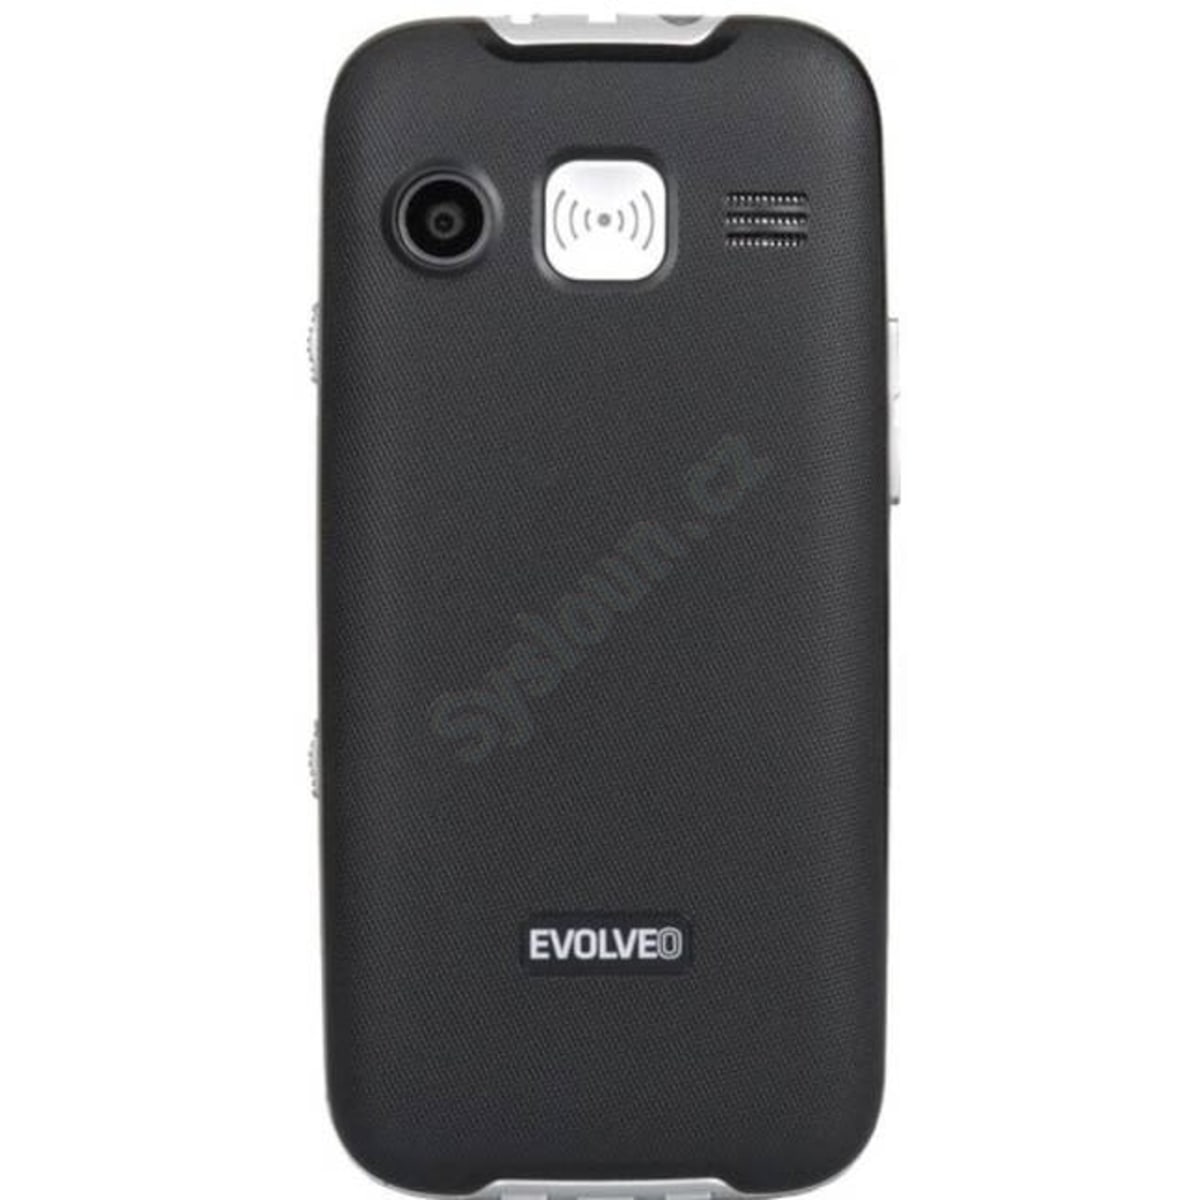 Evolveo EasyPhone XD